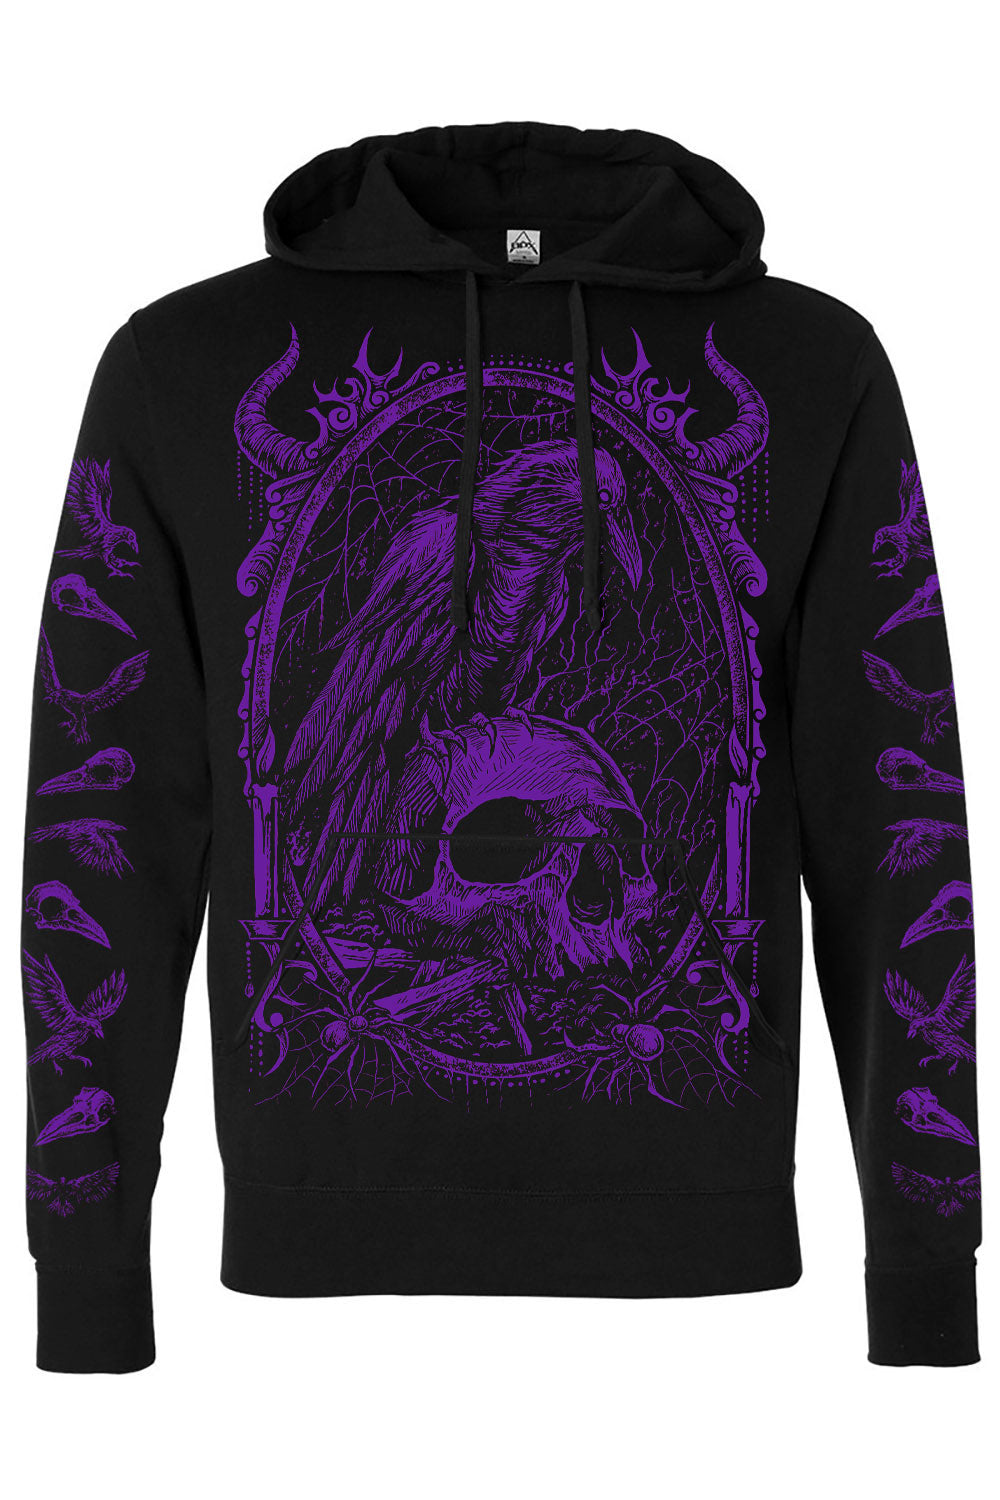 black and purple graphic hoodie